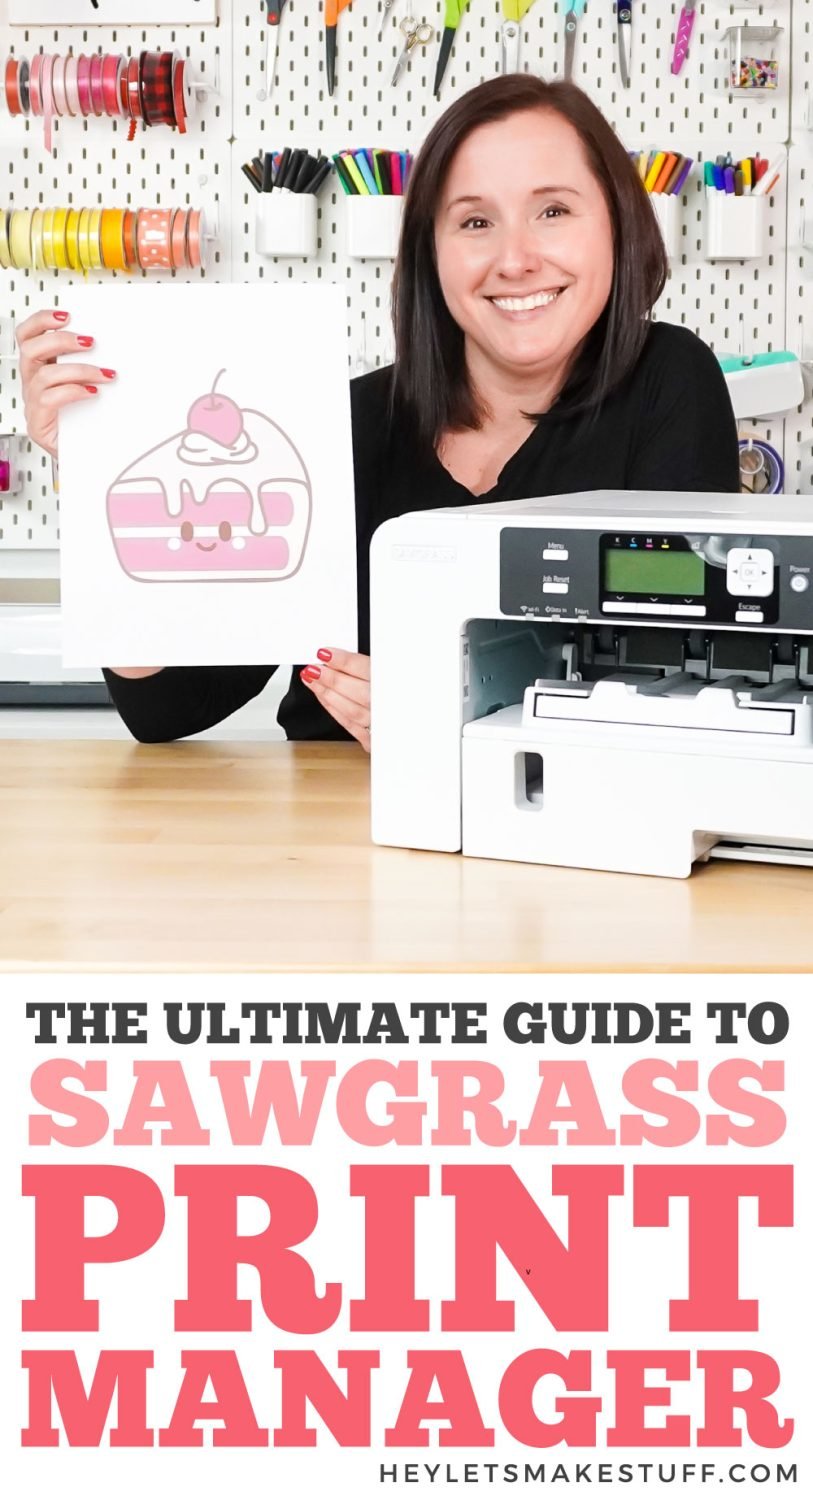 Sawgrass Print Manager Pin Image